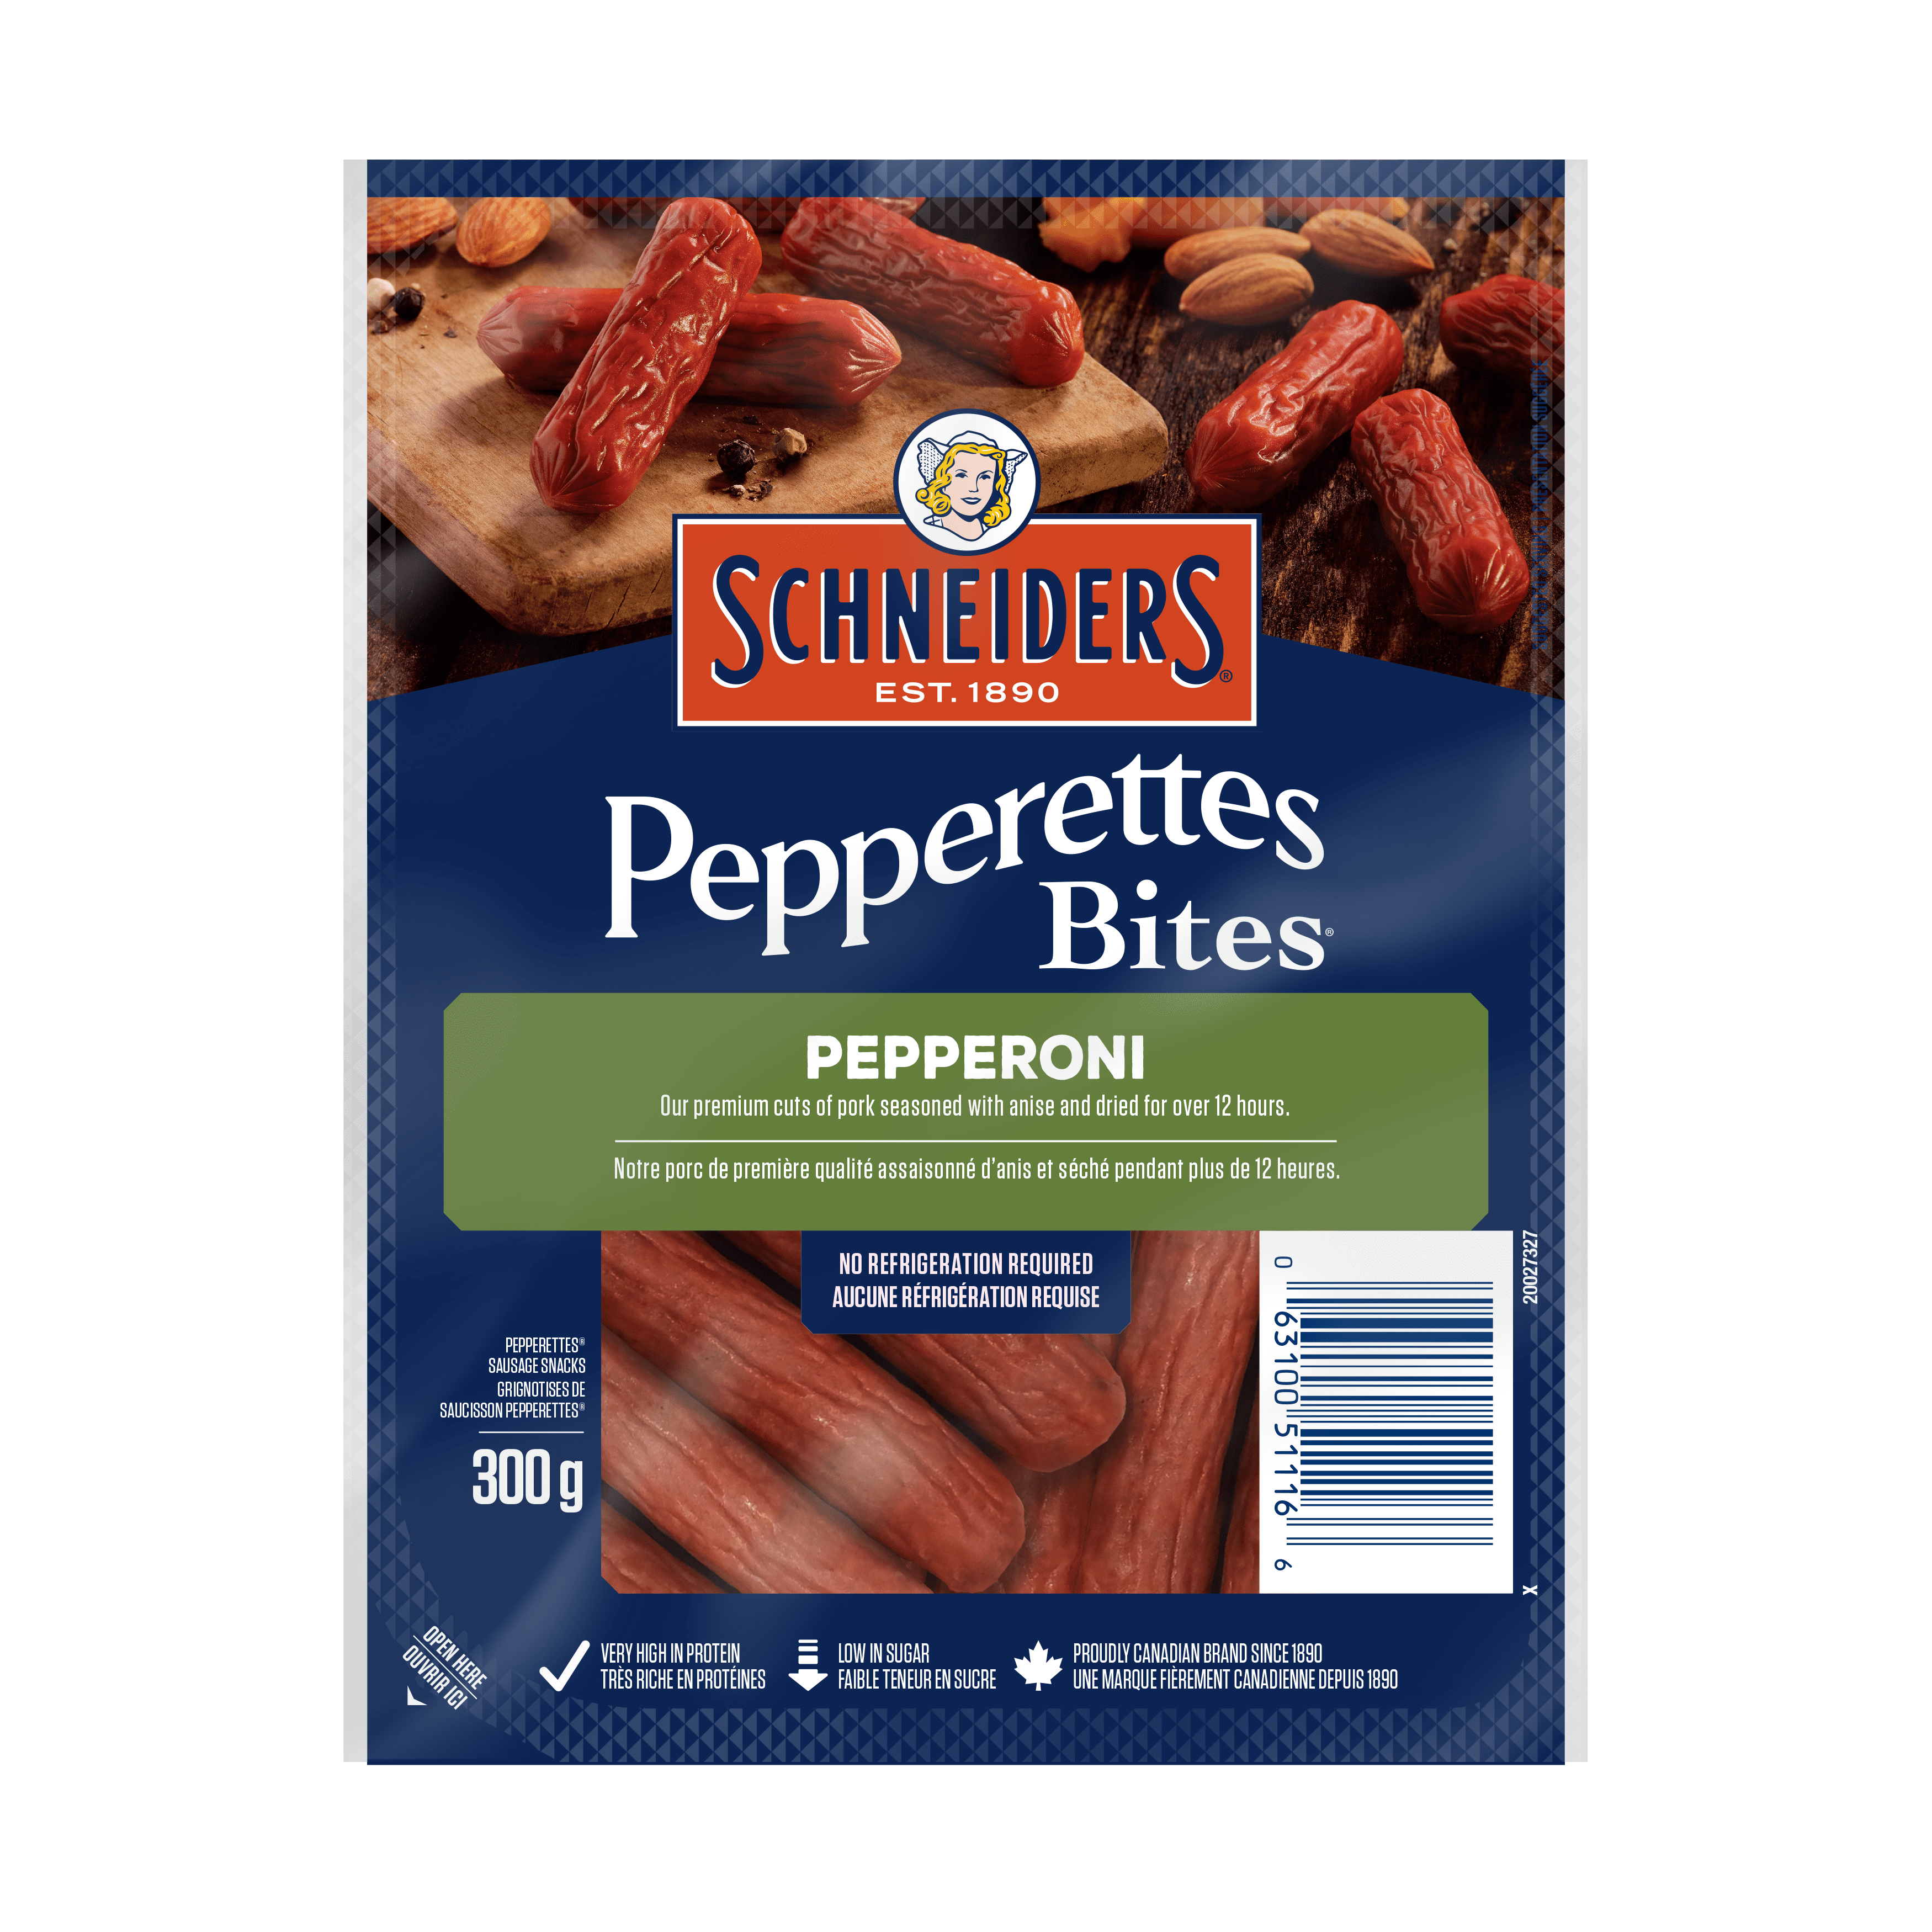 Pepperoni Pepperettes Bites